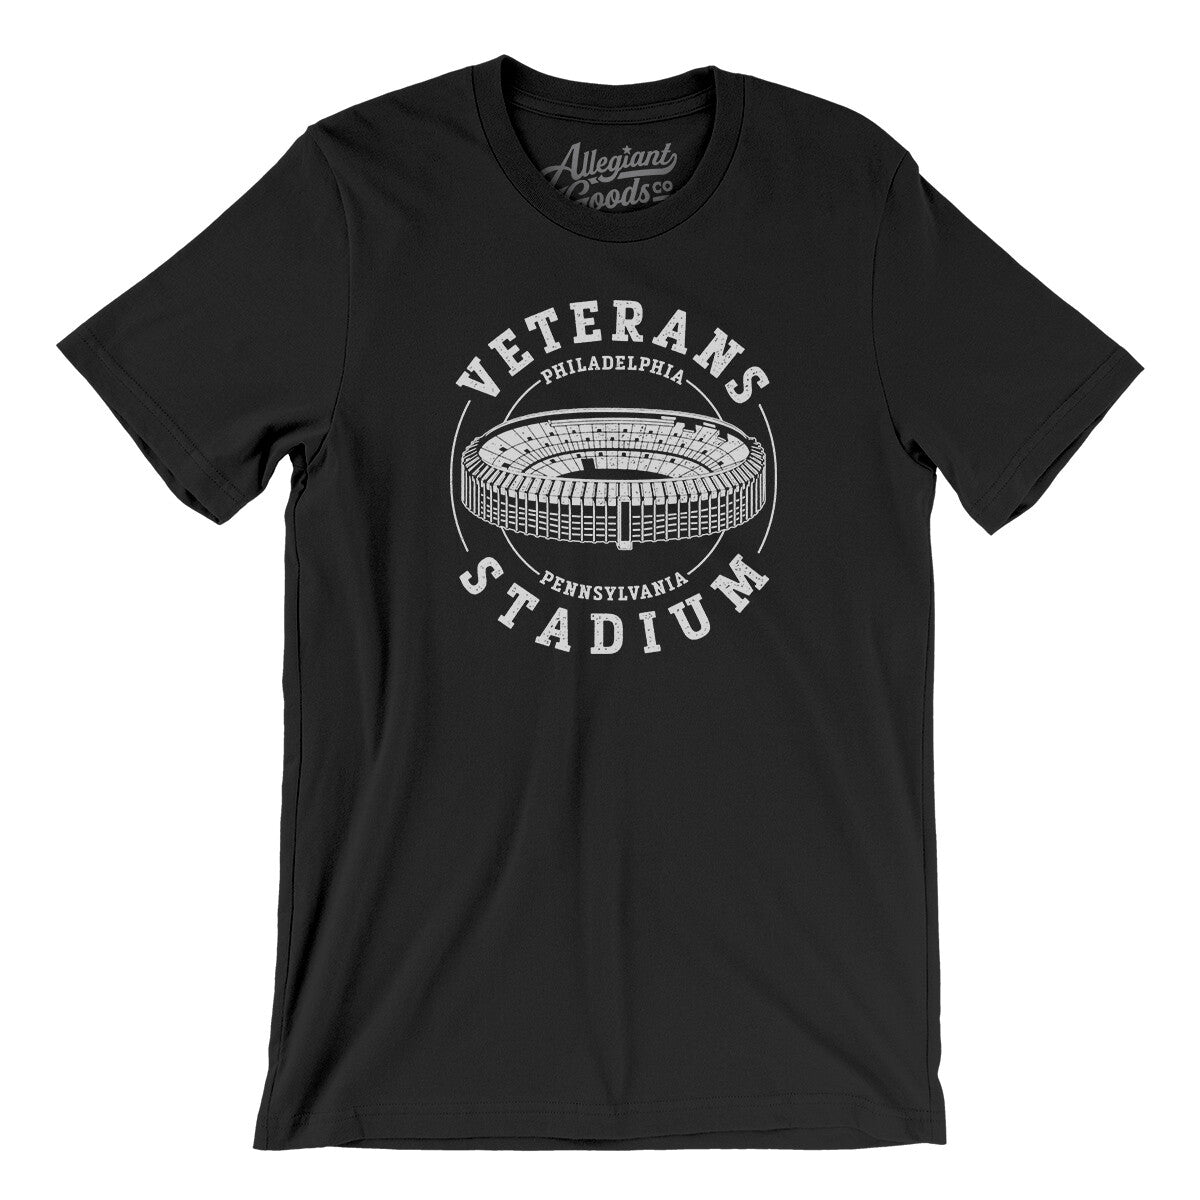 Veterans Stadium Come Out Fightin' t-shirt - Men's